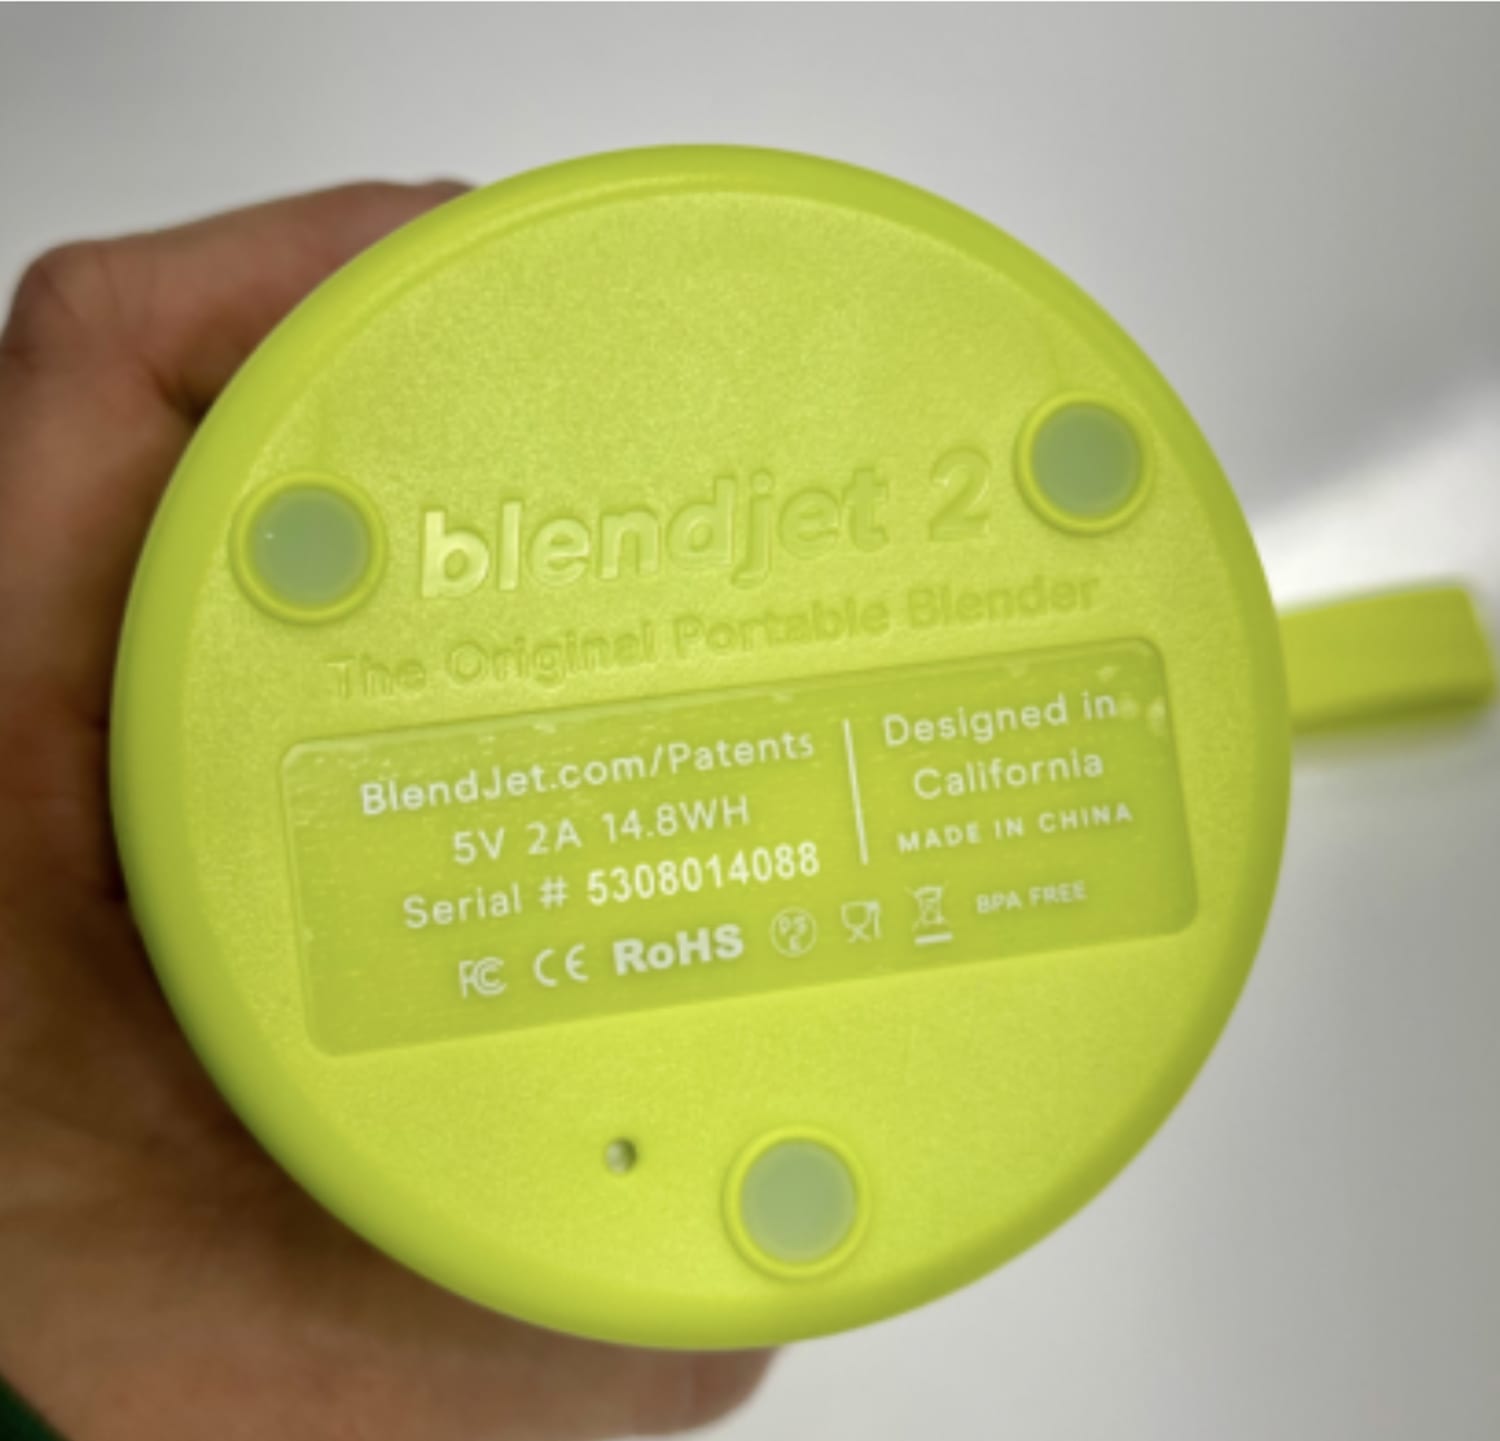 Over 4.5 Million BlendJet Portable Blenders Recalled Due to Fire